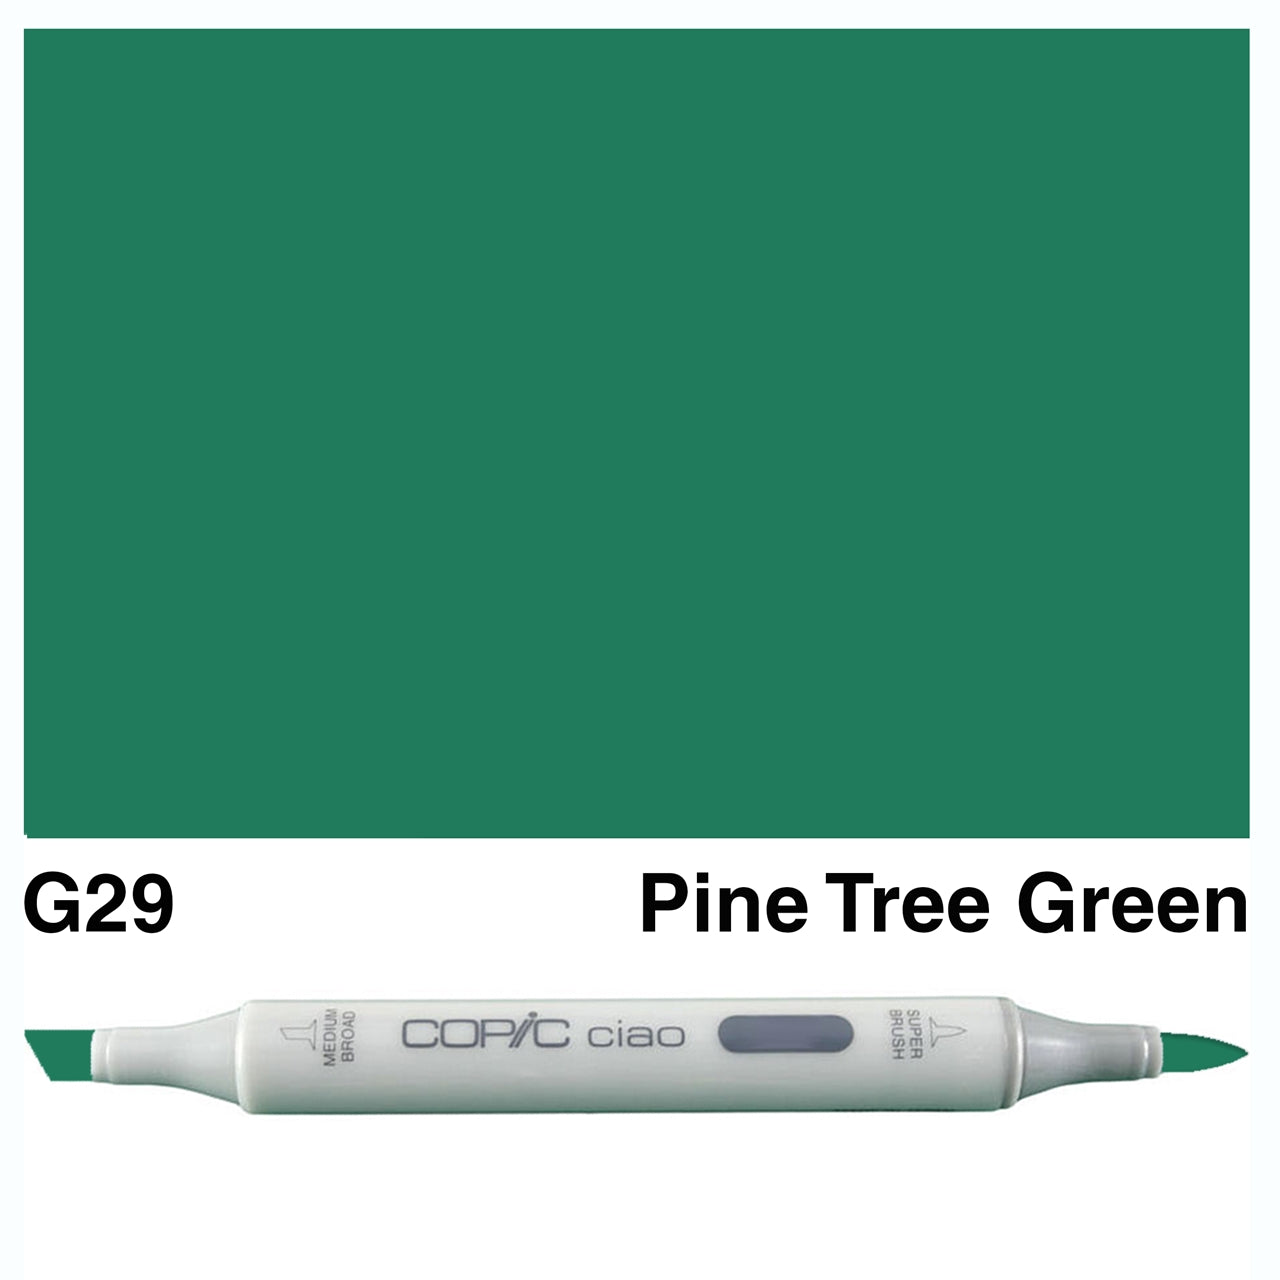 Copic Ciao G29 Pine Tree Green